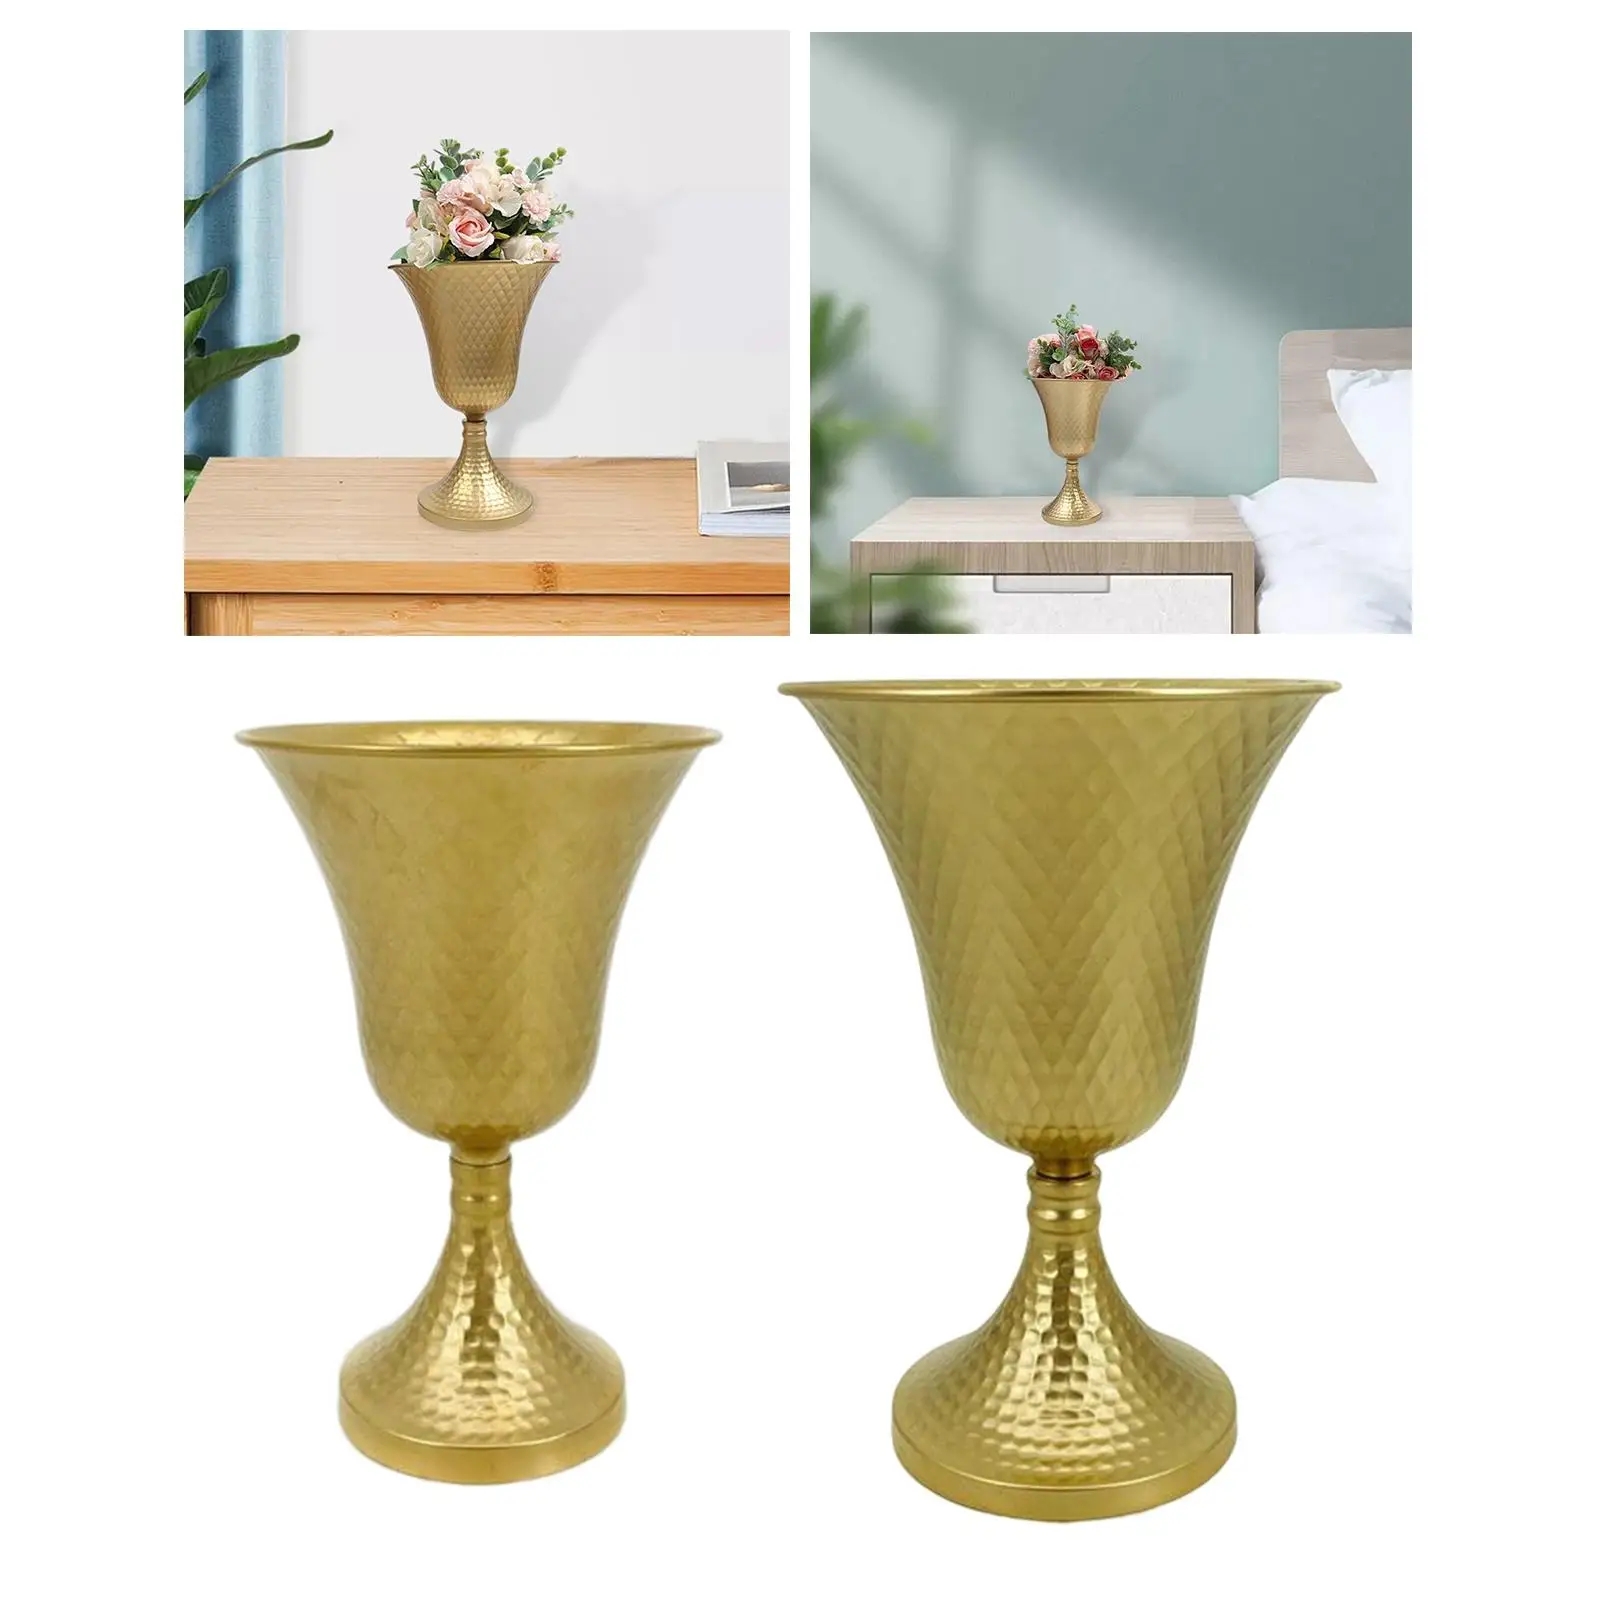 European Style Iron Vase Vase Modern Table Centerpiece Decorative Bottle for Wedding Decor